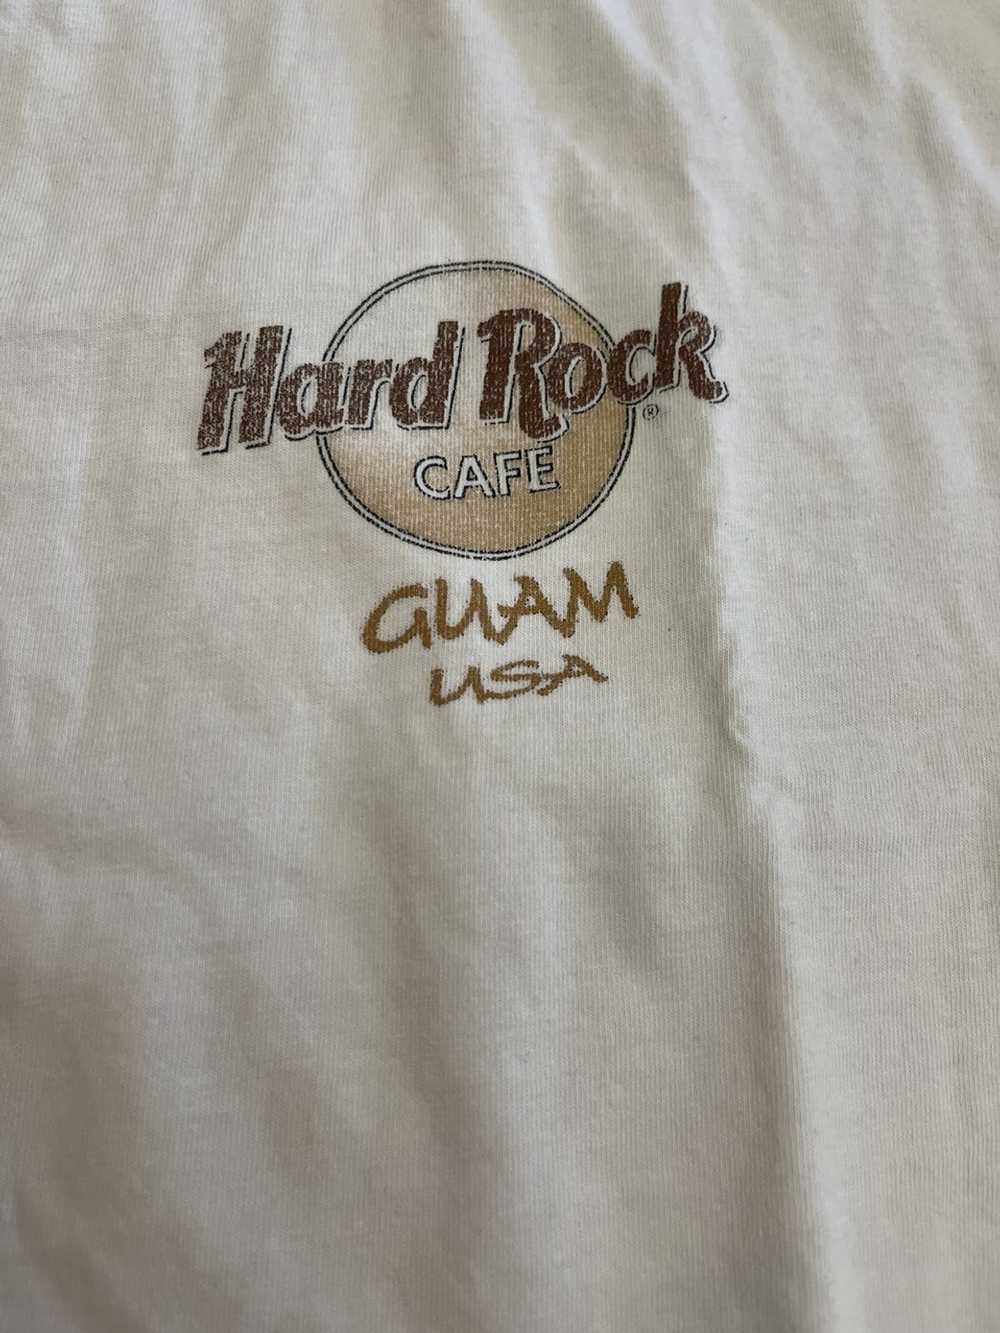 Hard Rock Cafe Hard Rock guam tee - image 2